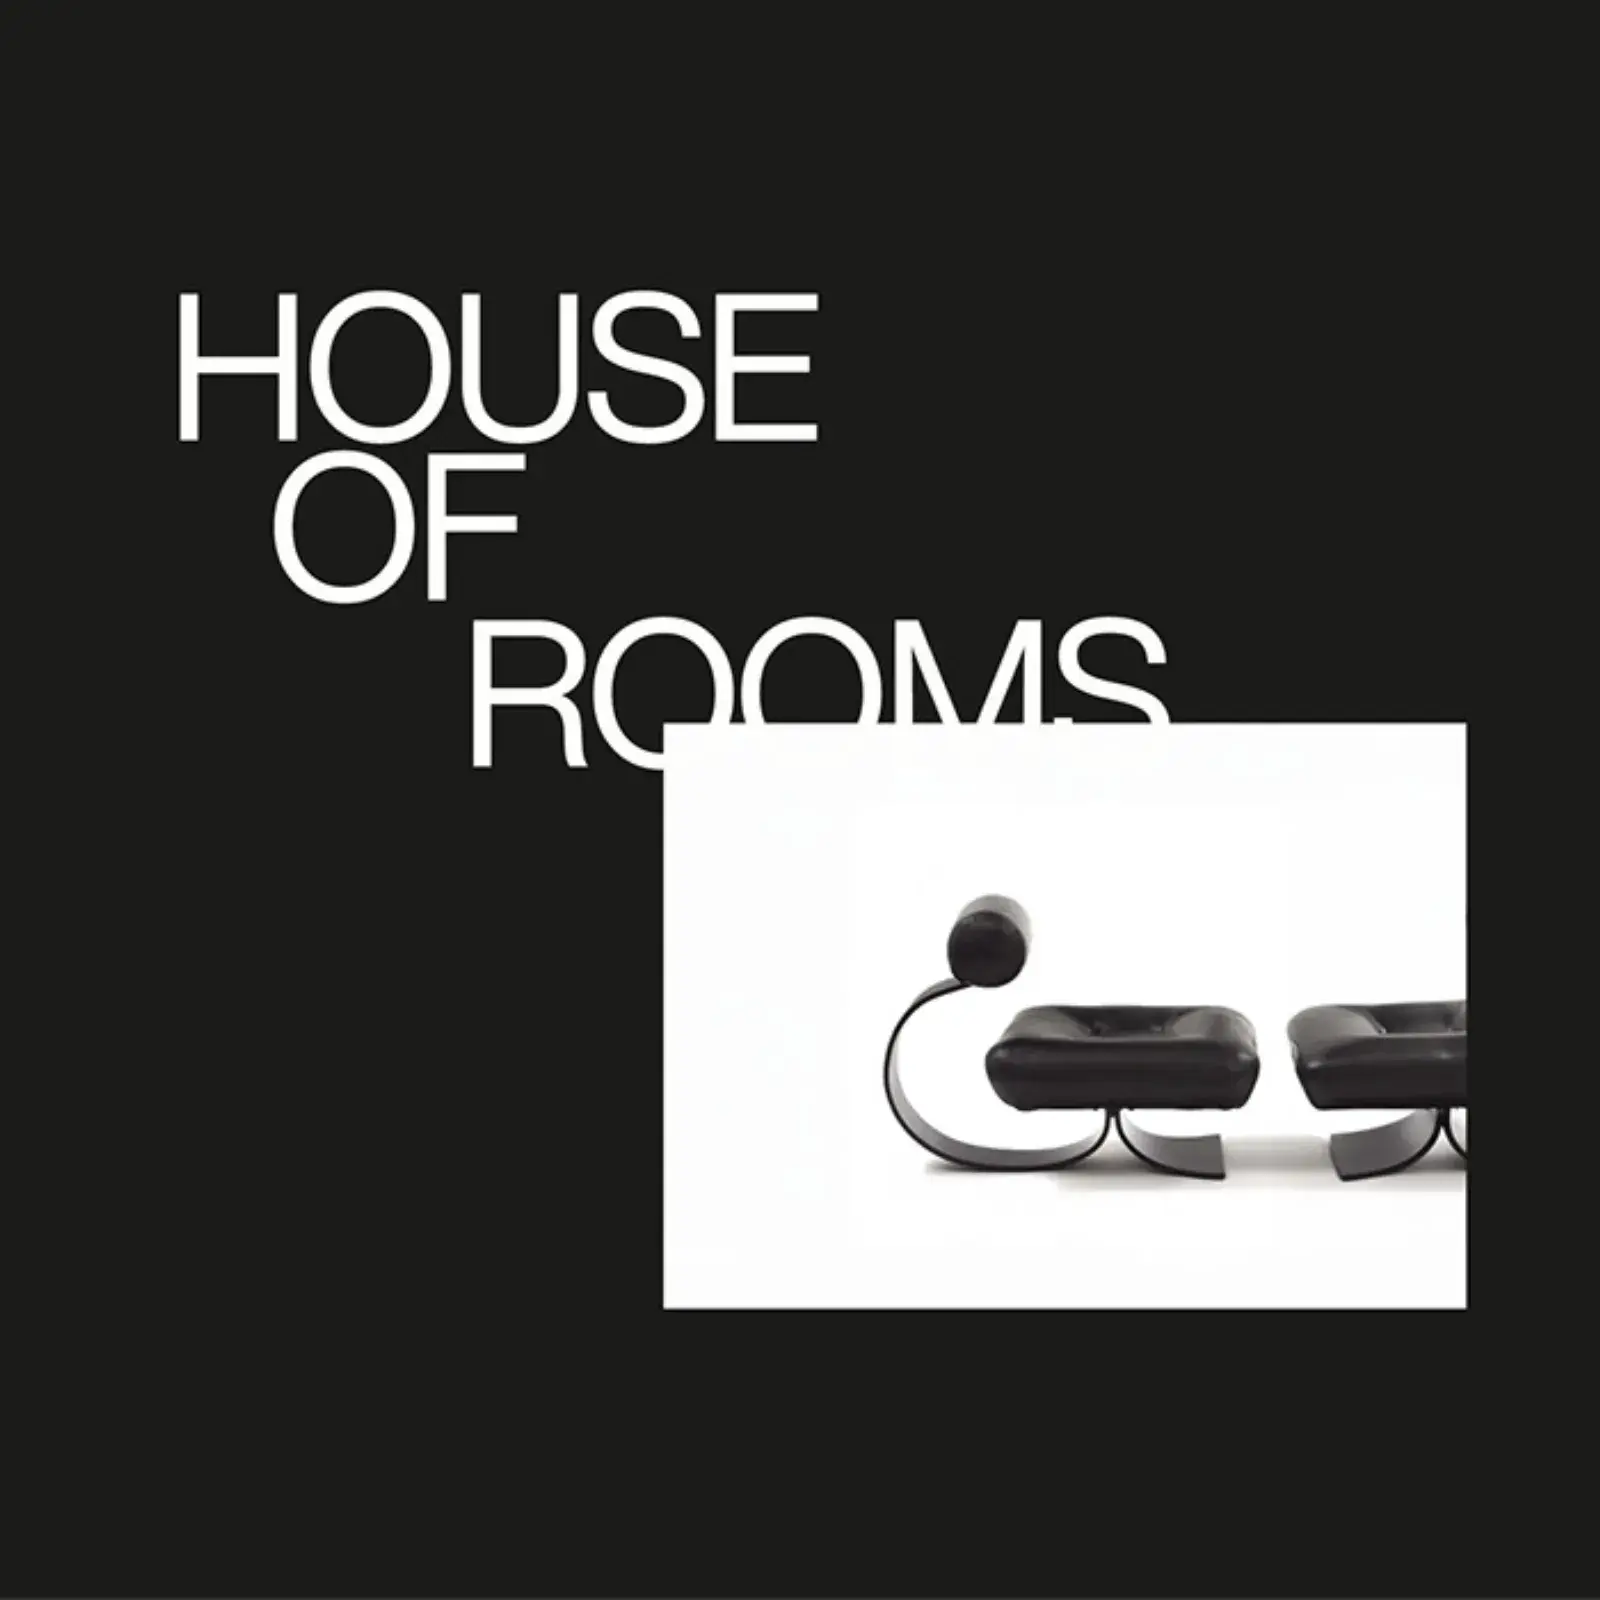 House of Rooms: Peak of Branding & Motion Design Mastery